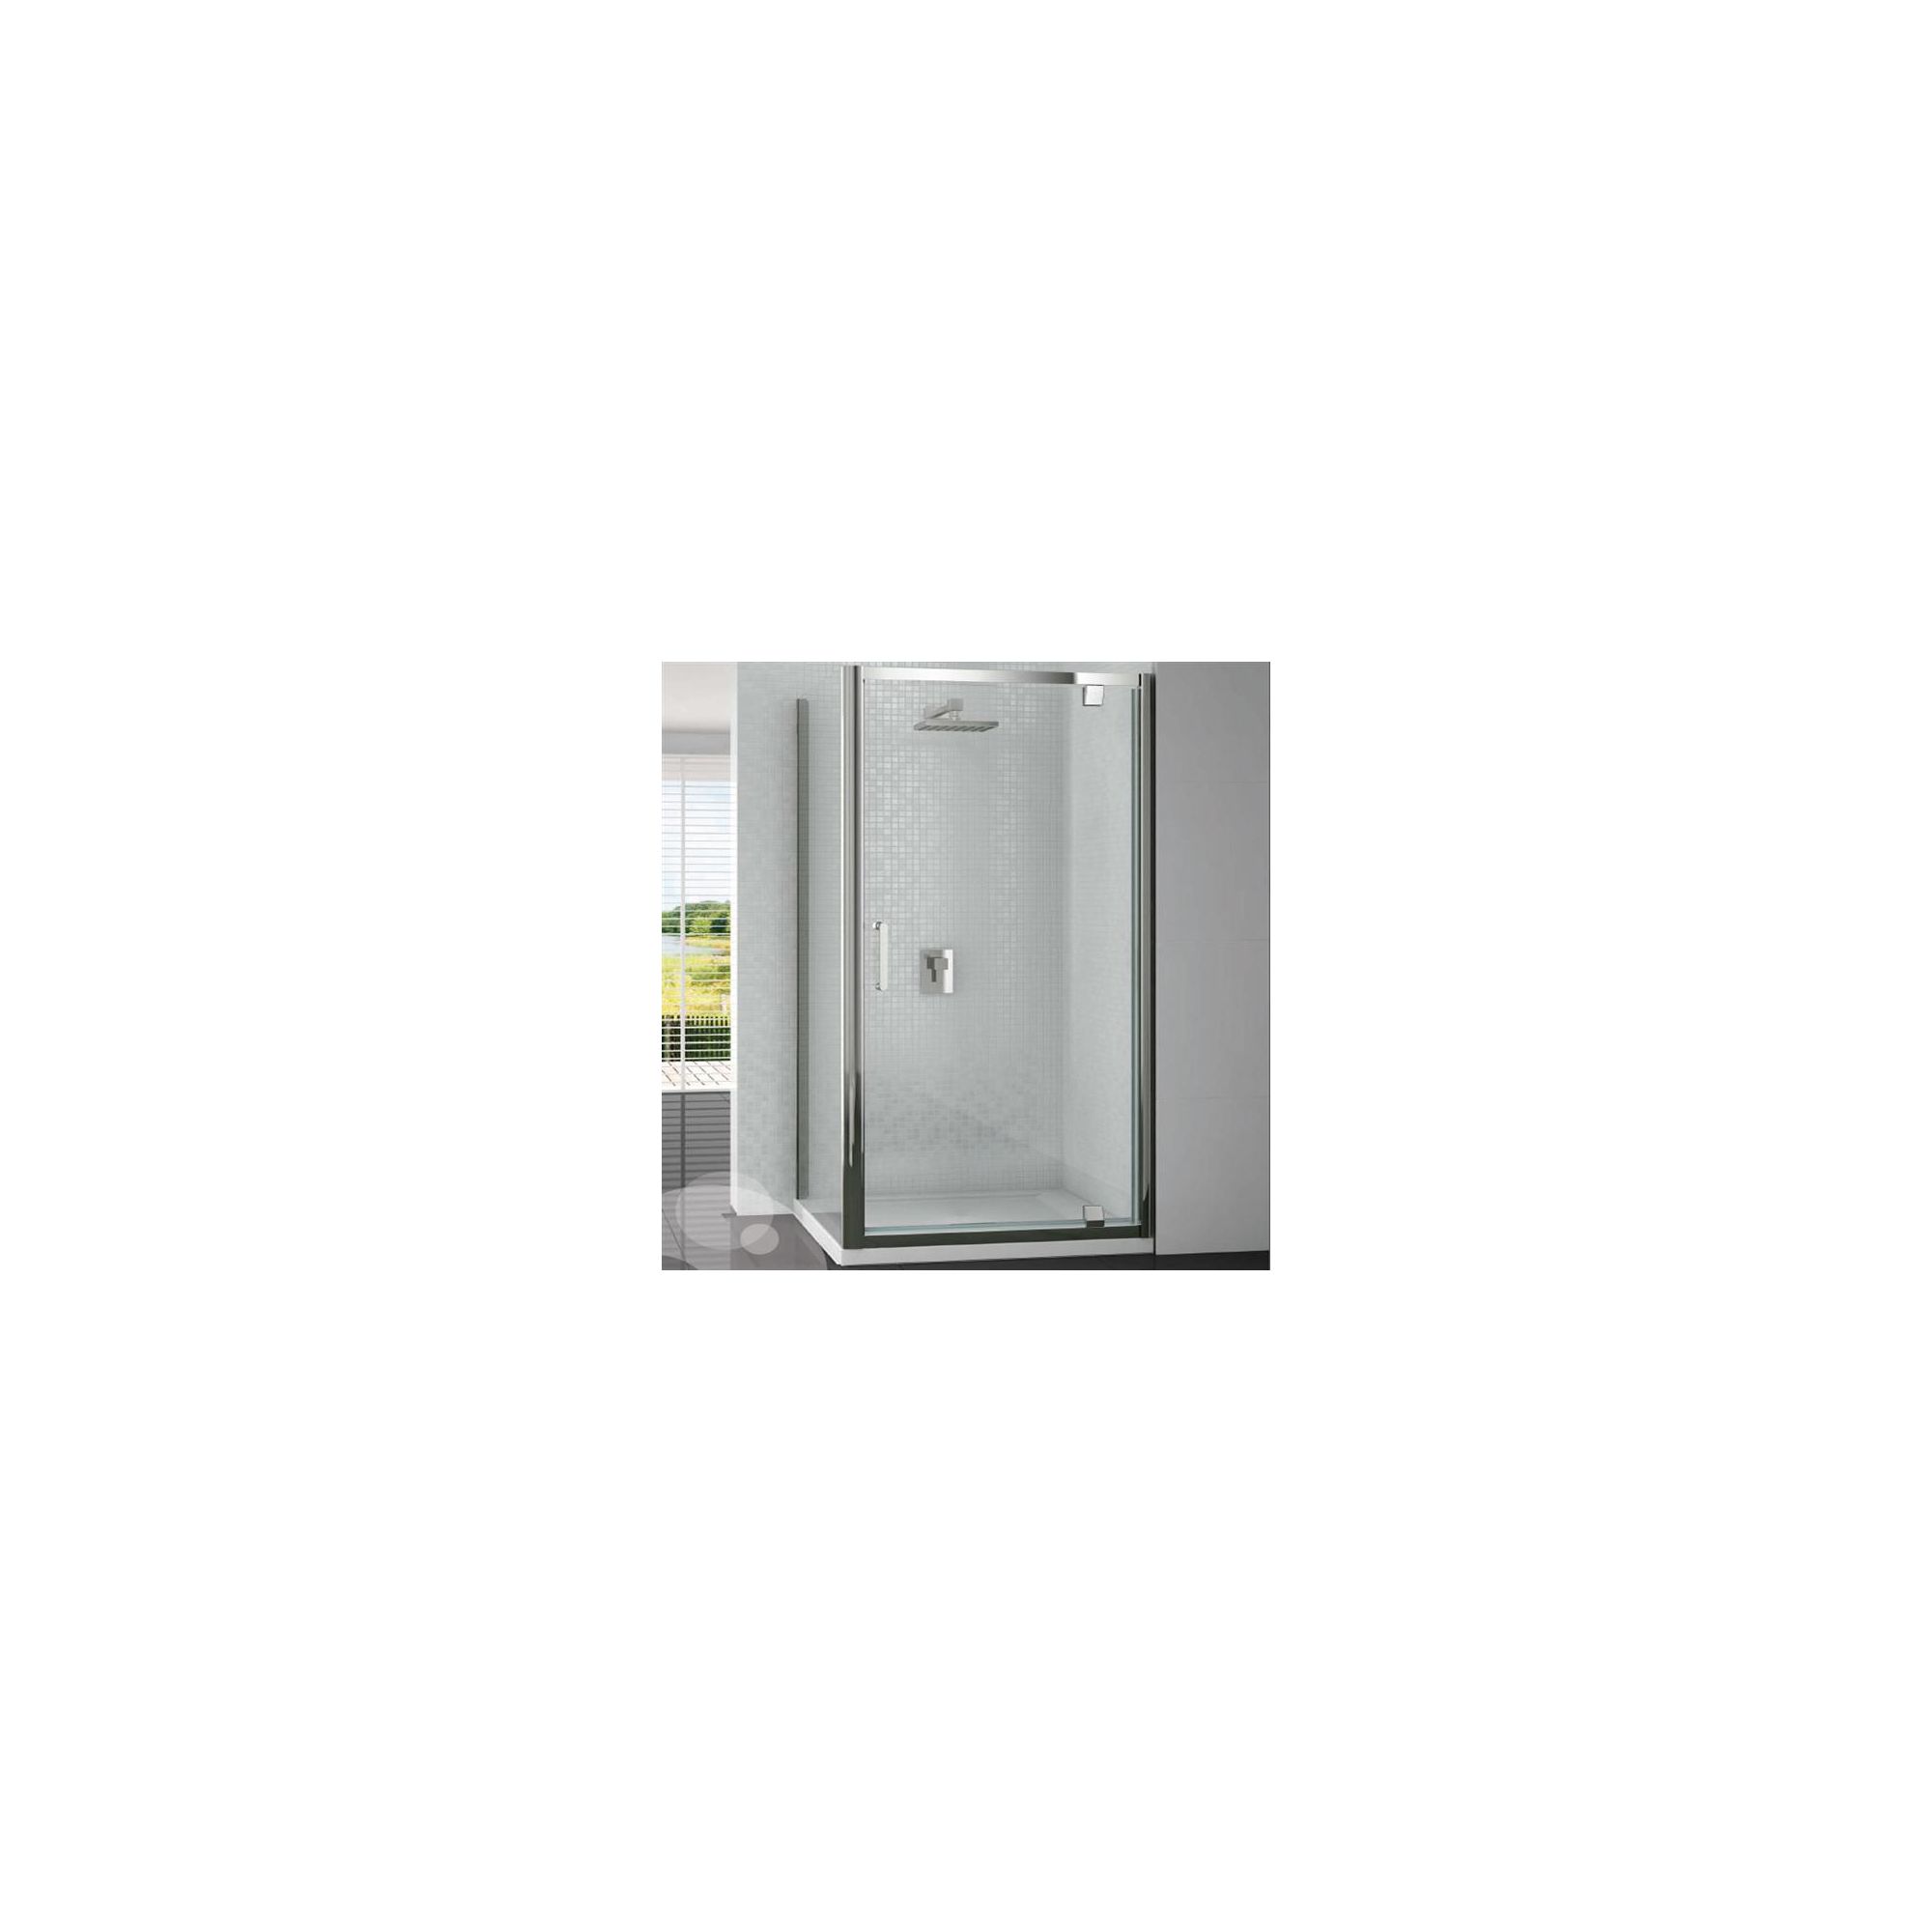 Merlyn Vivid Six Pivot Shower Door, 900mm Wide, 6mm Glass at Tesco Direct